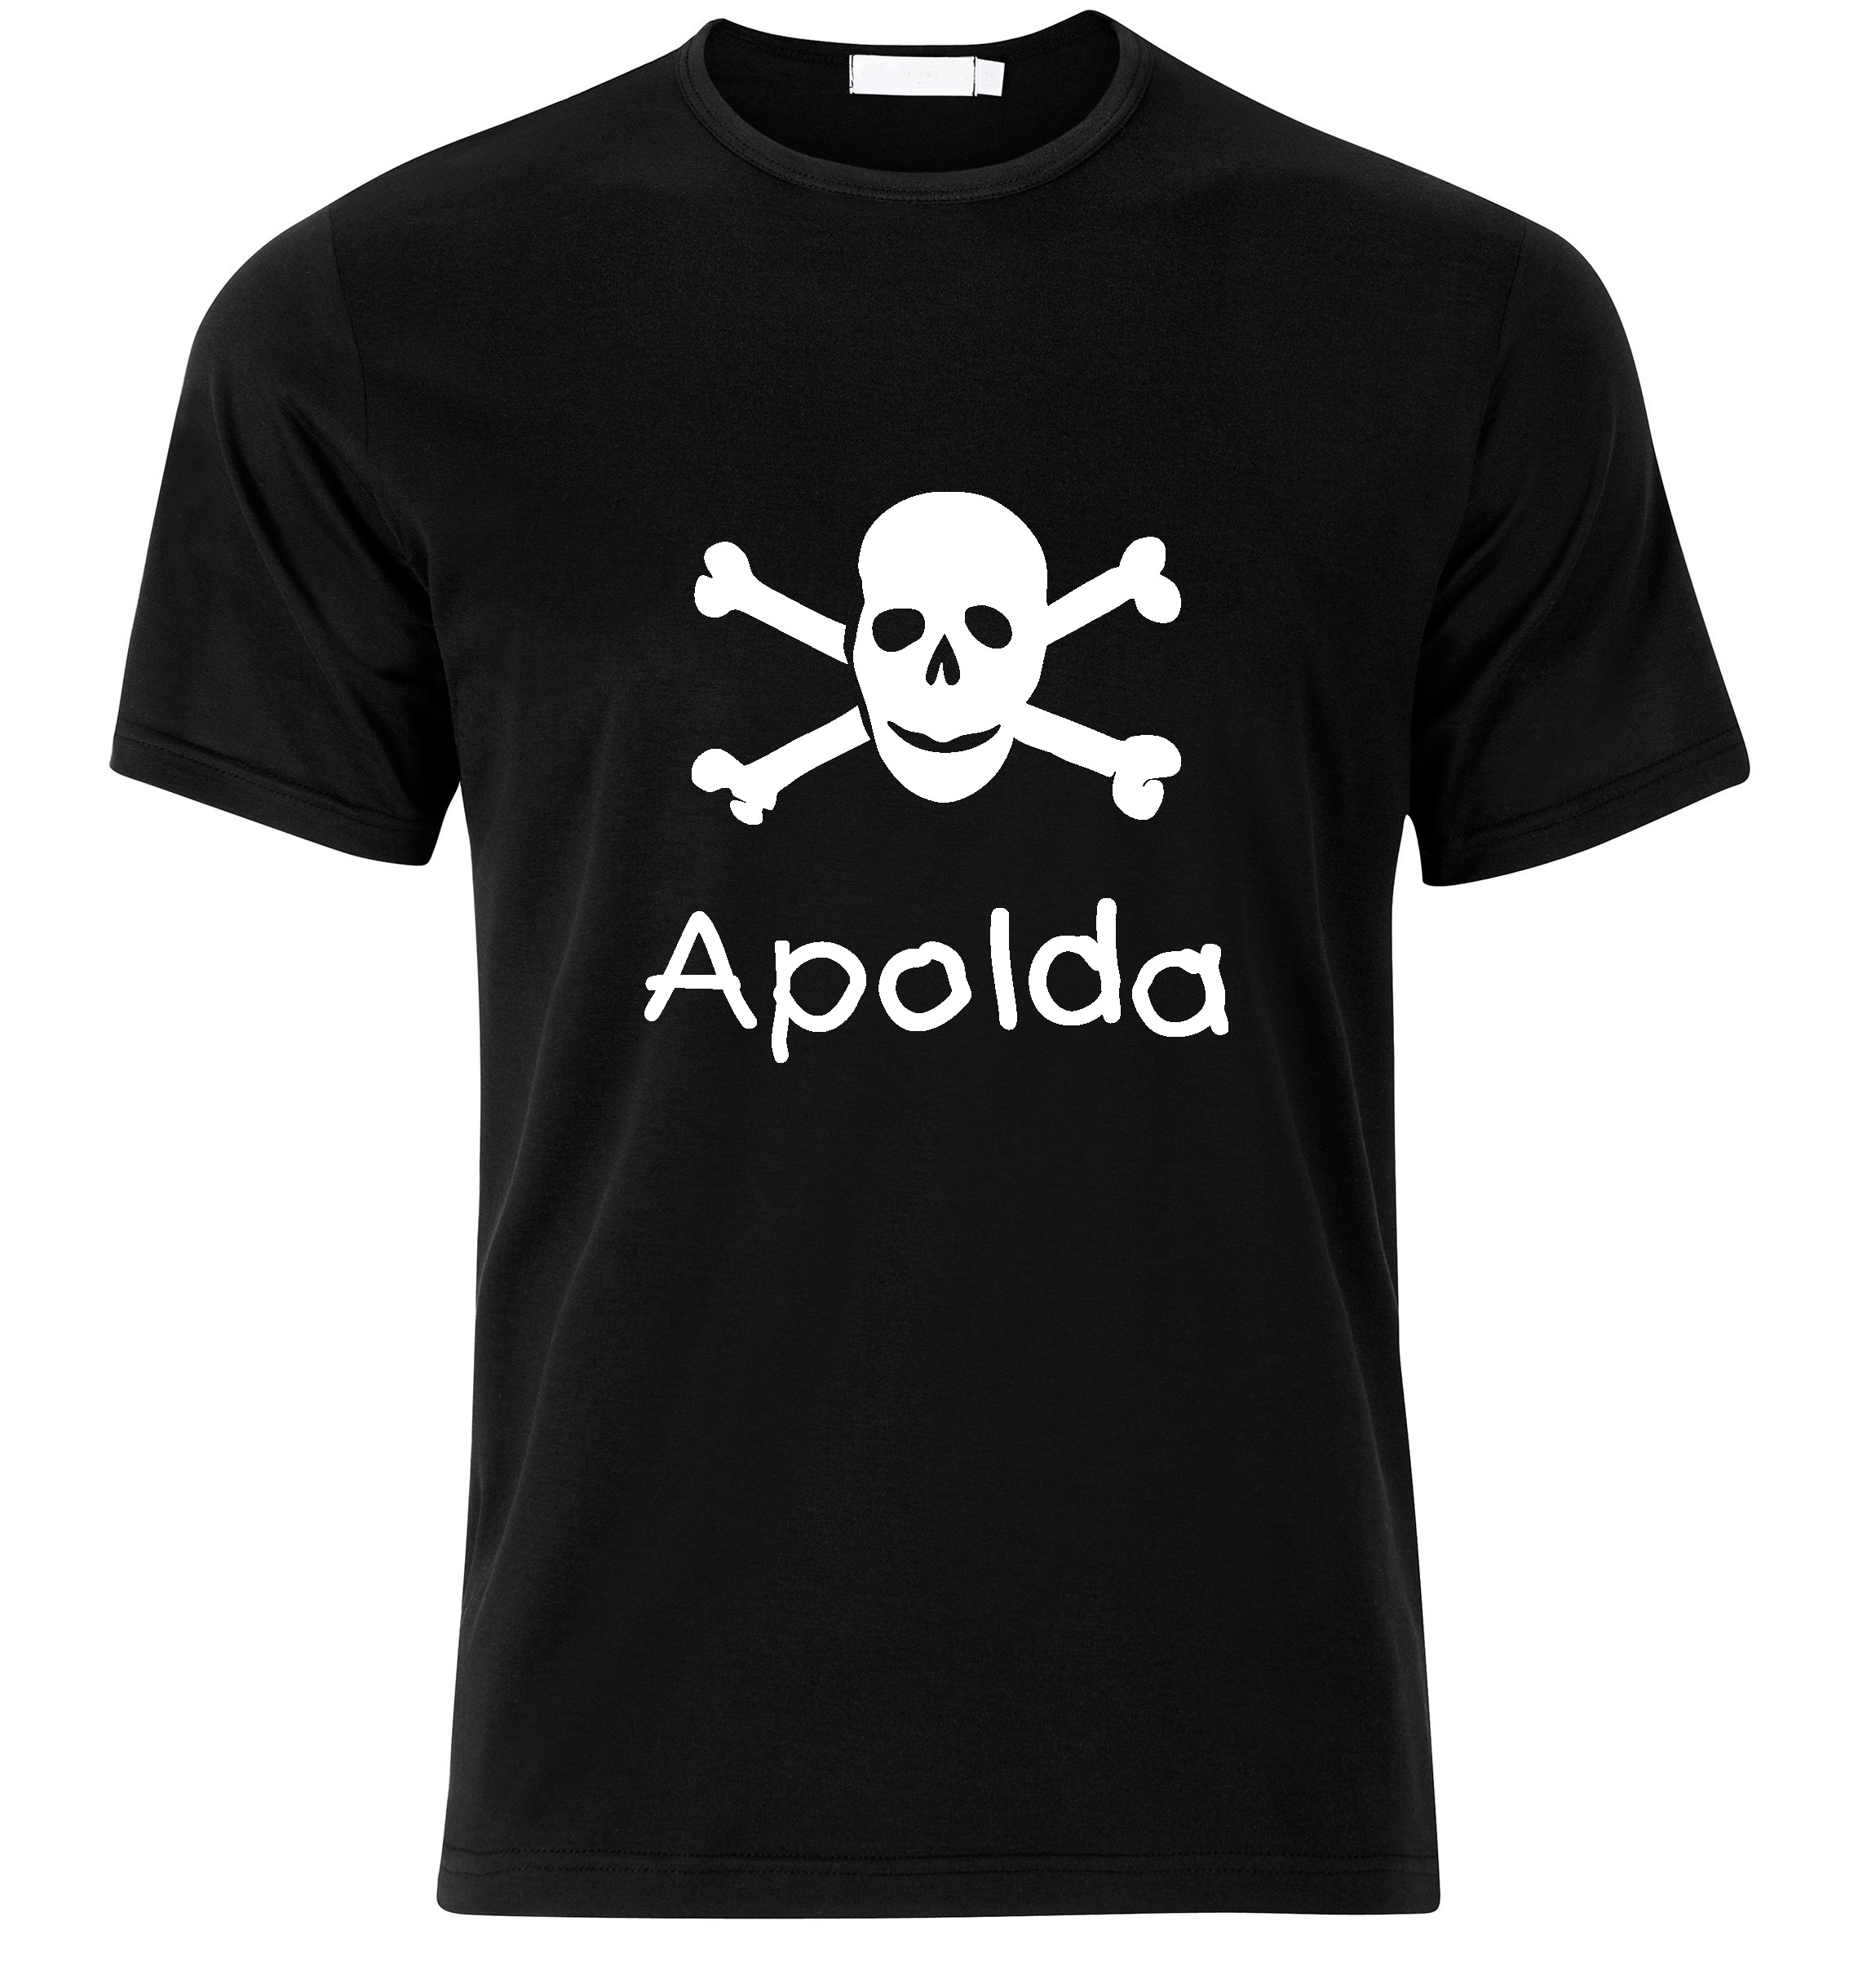 T-Shirt Apolda Jolly Roger, Totenkopf